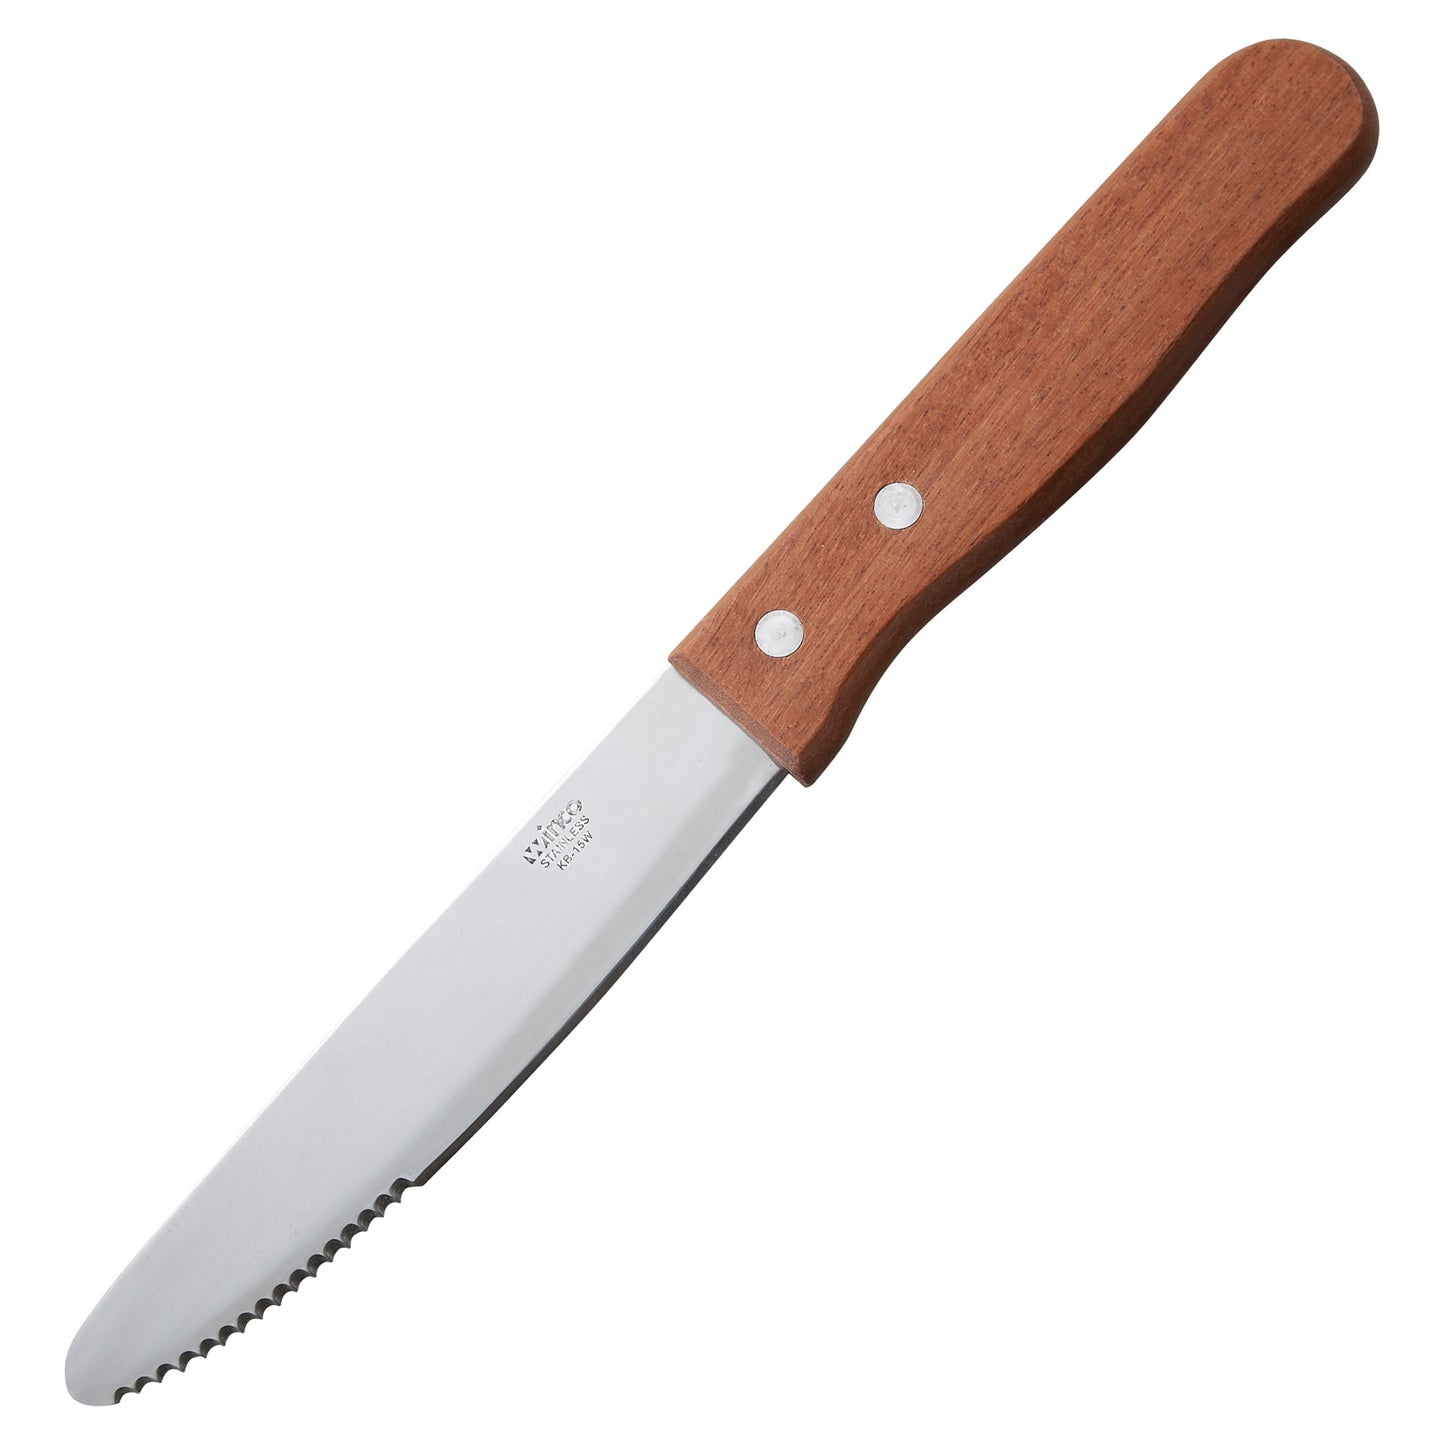 KB-15W - Jumbo Steak Knives, 5" Blade, Wooden Handle, Round Tip